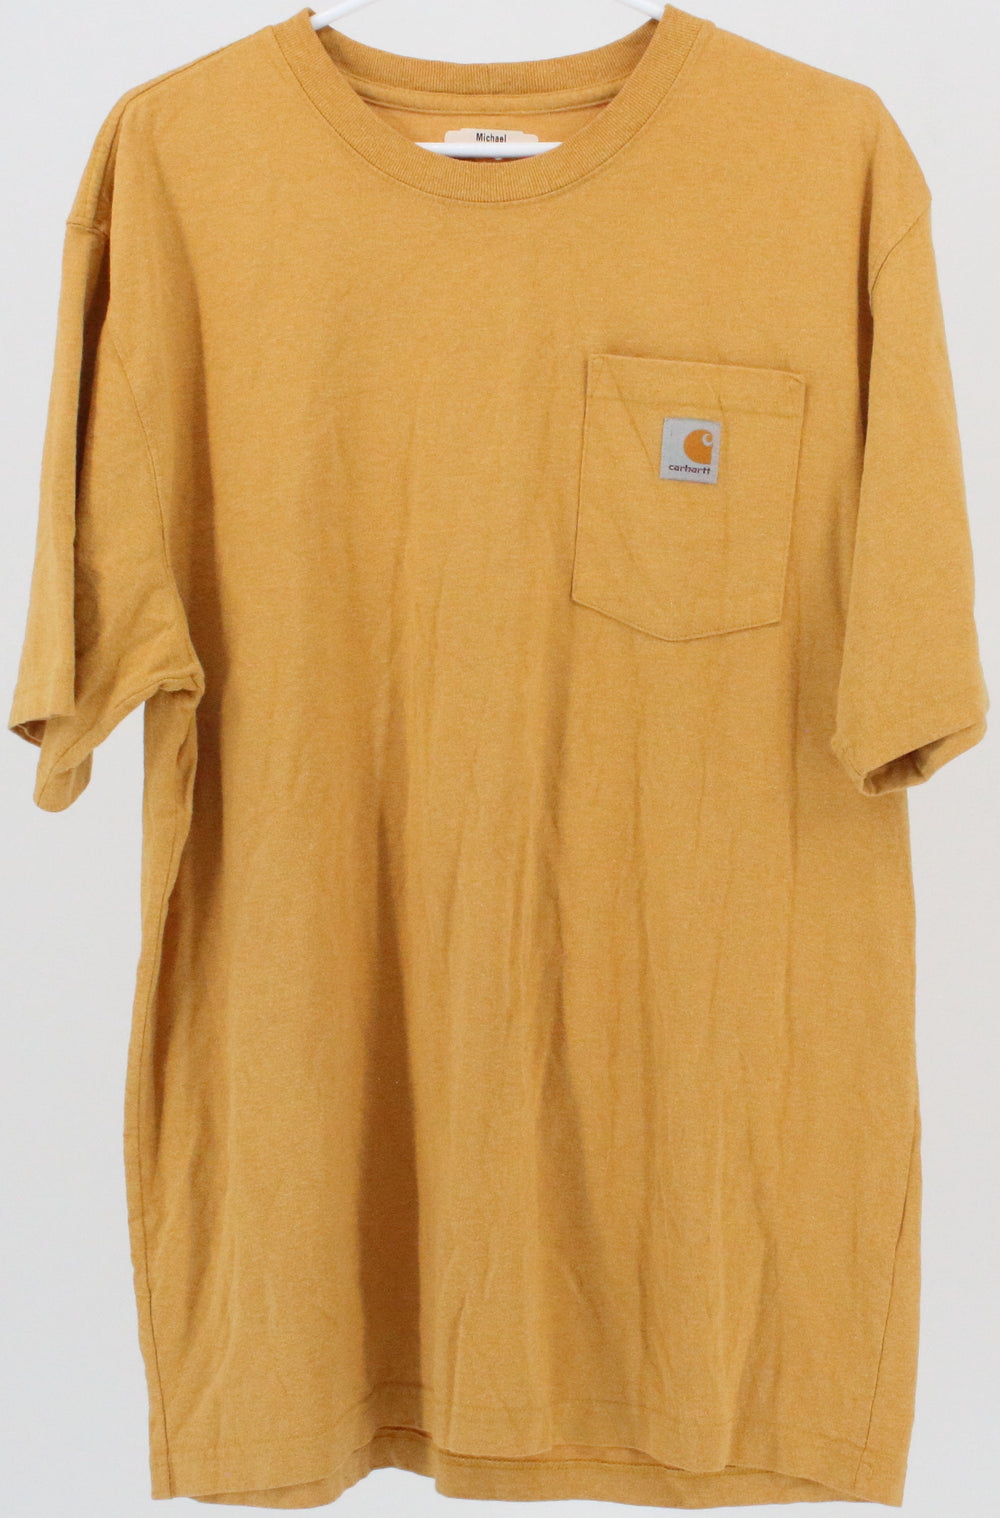 Carhartt Original Fit Yellow Front Pocket T-Shirt